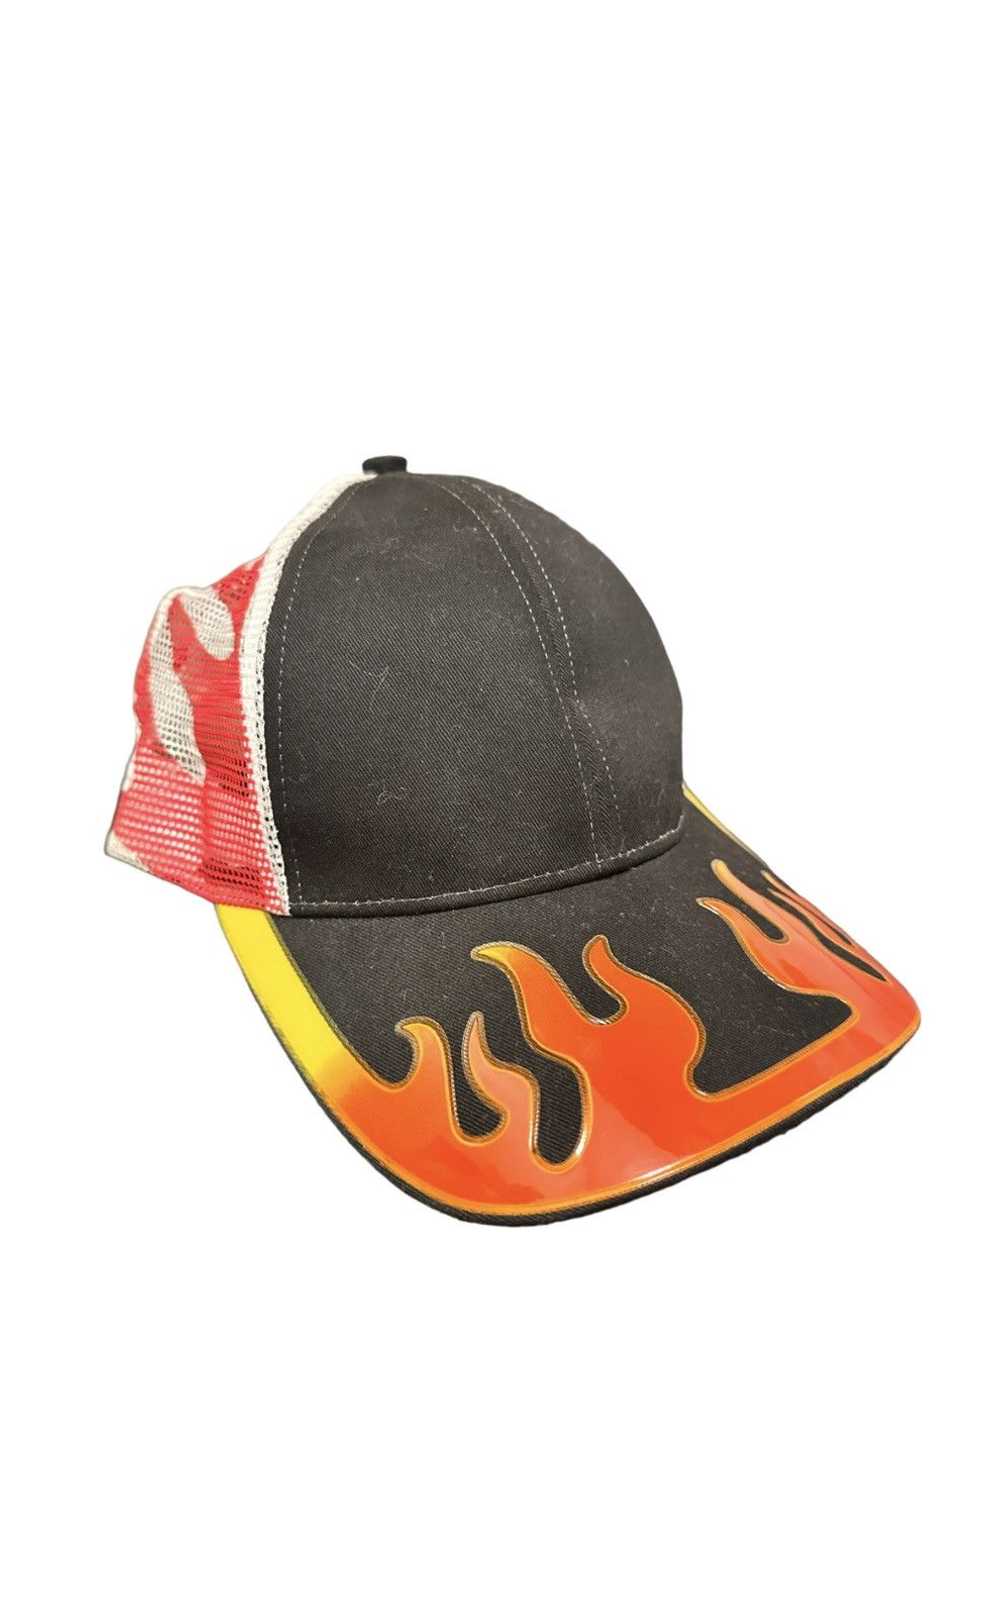 Custom × Hats × Streetwear Flame Cap - image 7